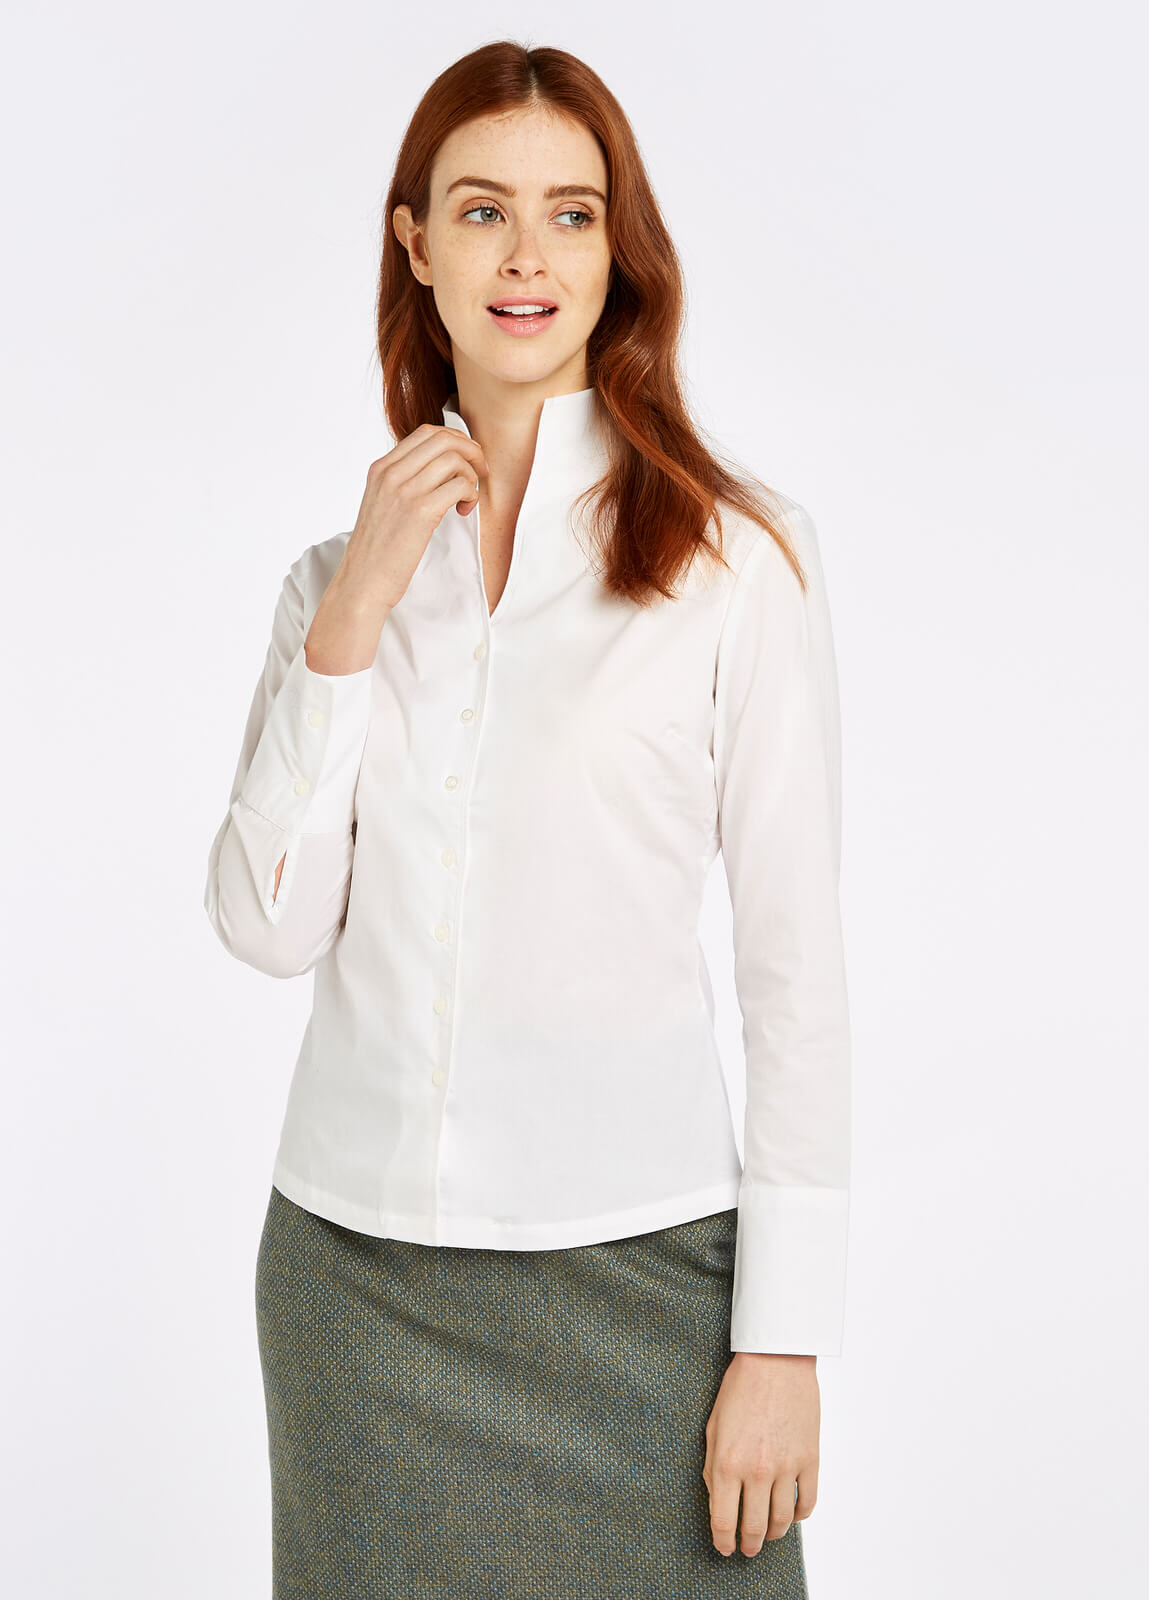 Beautifully of - Ireland designed for Women | Dubarry Shirts Dubarry USA